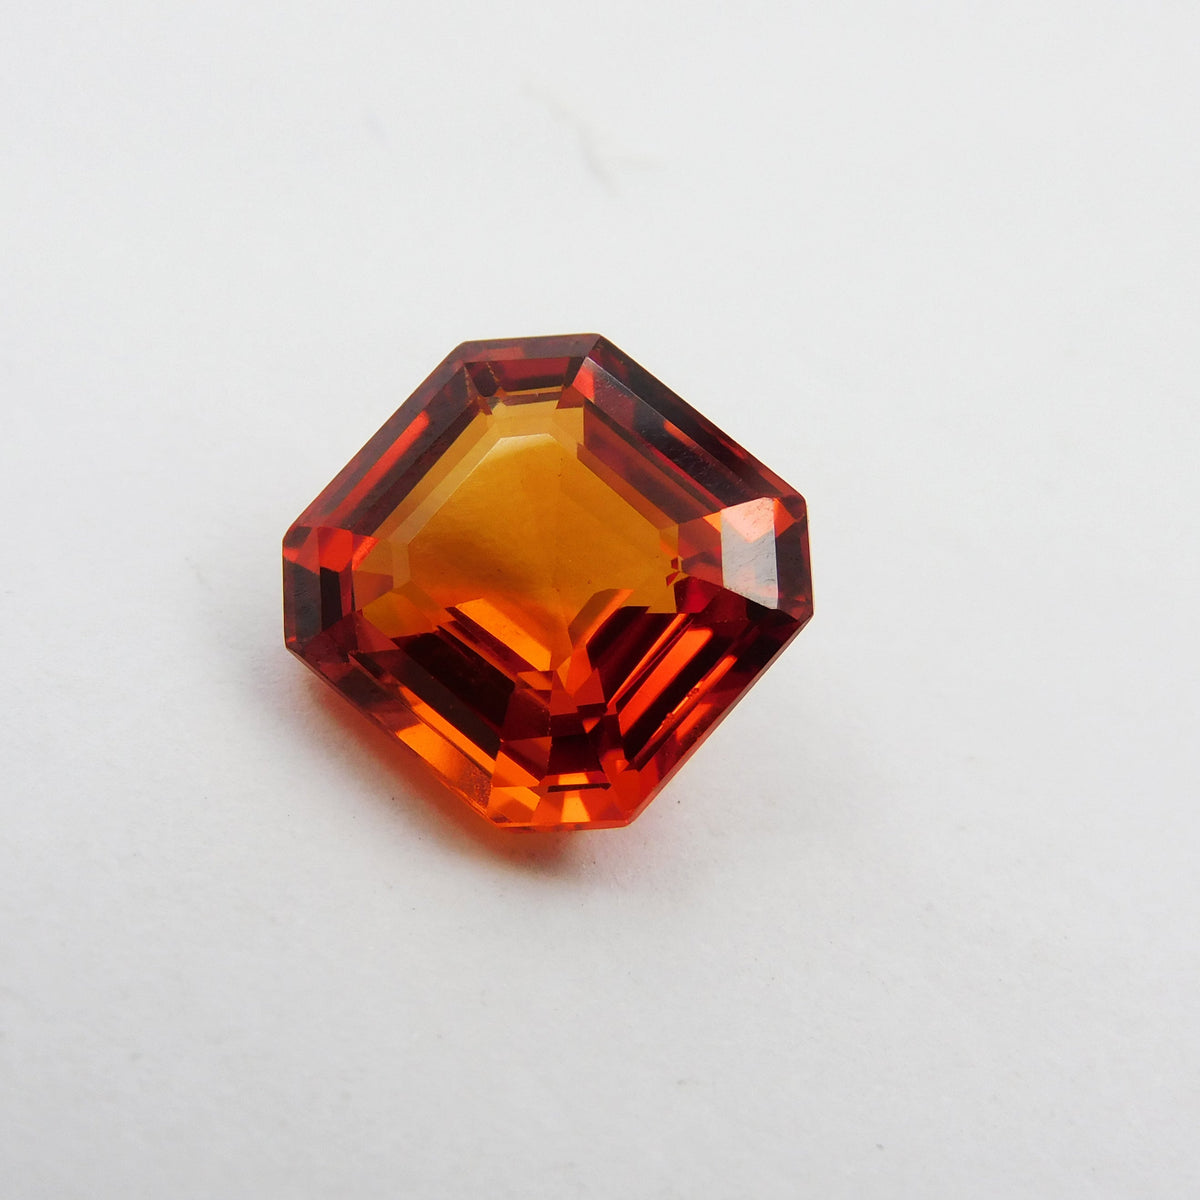 Free Shipping Free Gift ! Jwelery Making Gem ! Natural Sapphire 6.35 Carat Square Cut Orange Color CERTIFIED Loose Gemstone